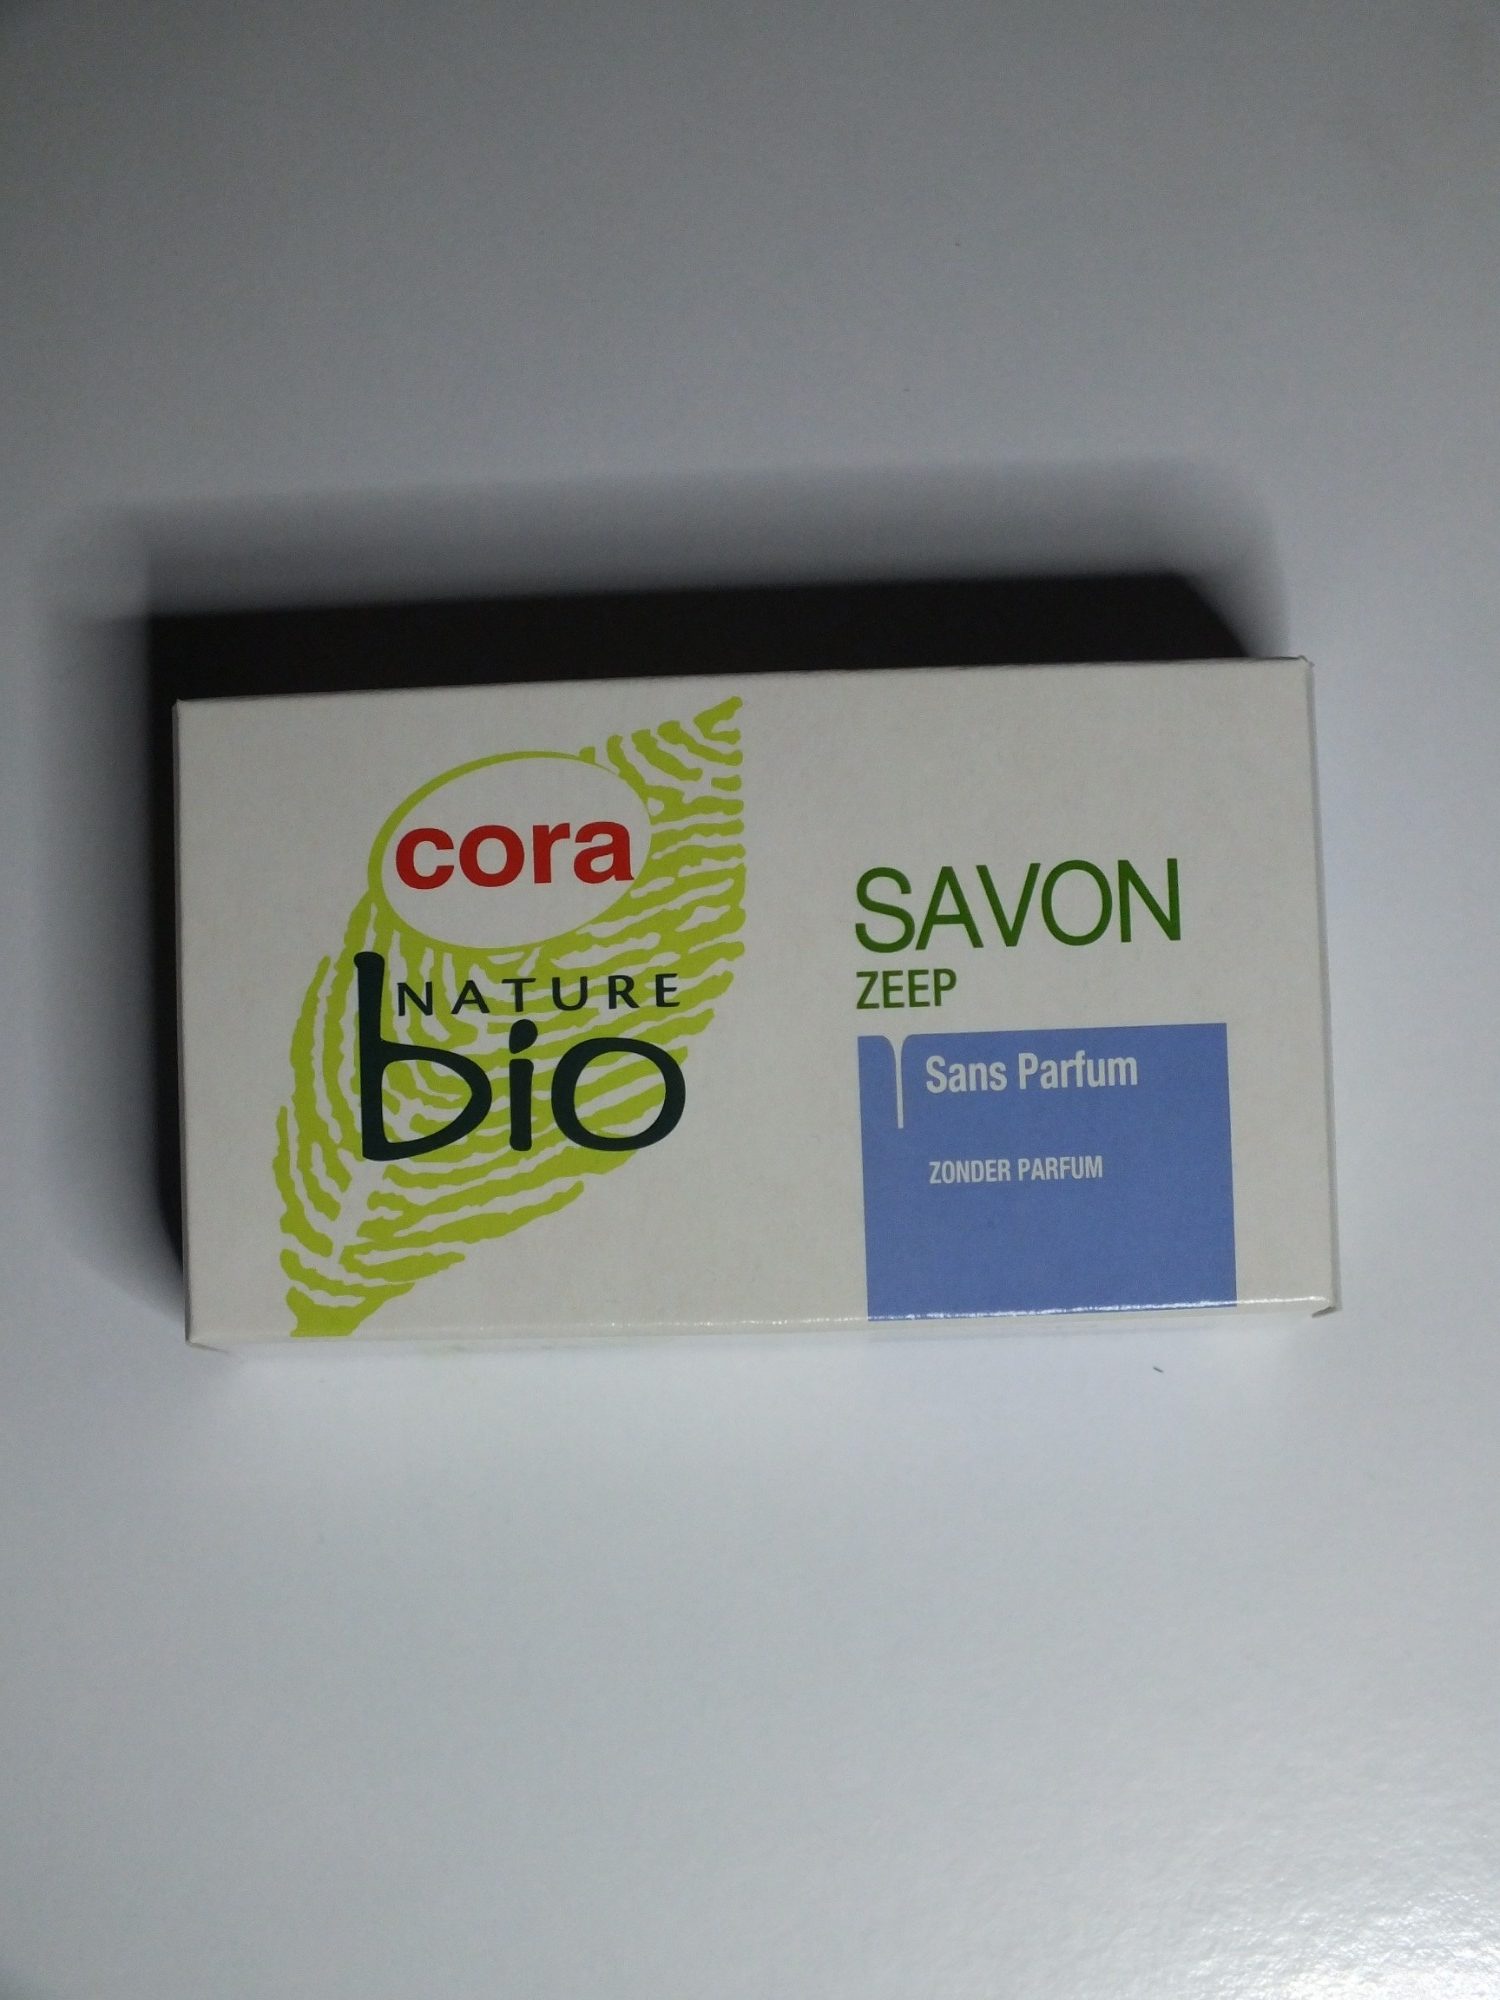 Savon bio nature - Product - fr